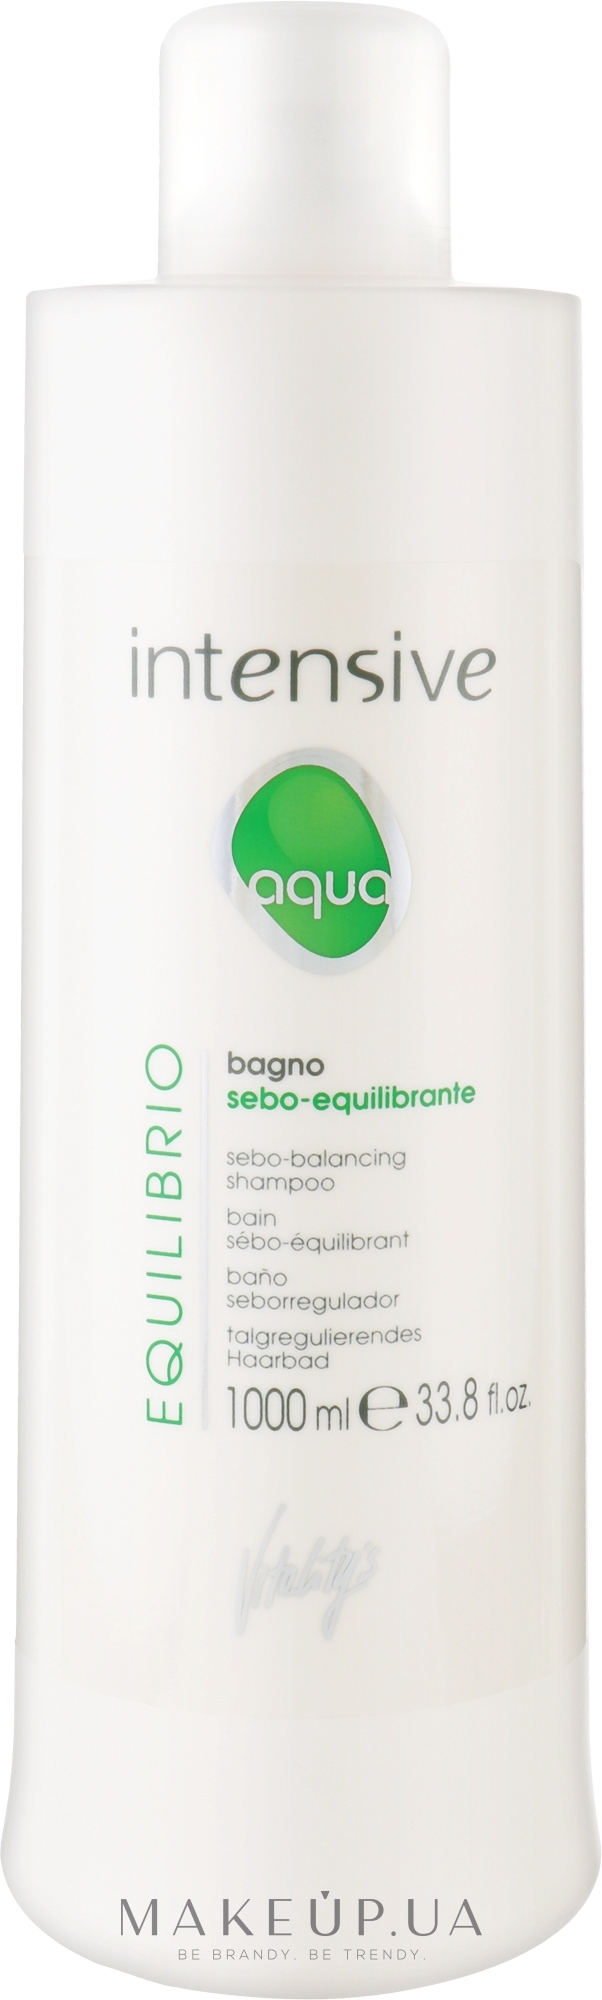 Шампунь себонормалізуючий - vitality's Intensive Aqua Equilibrio Sebo-Balancing Shampoo — фото 1000ml